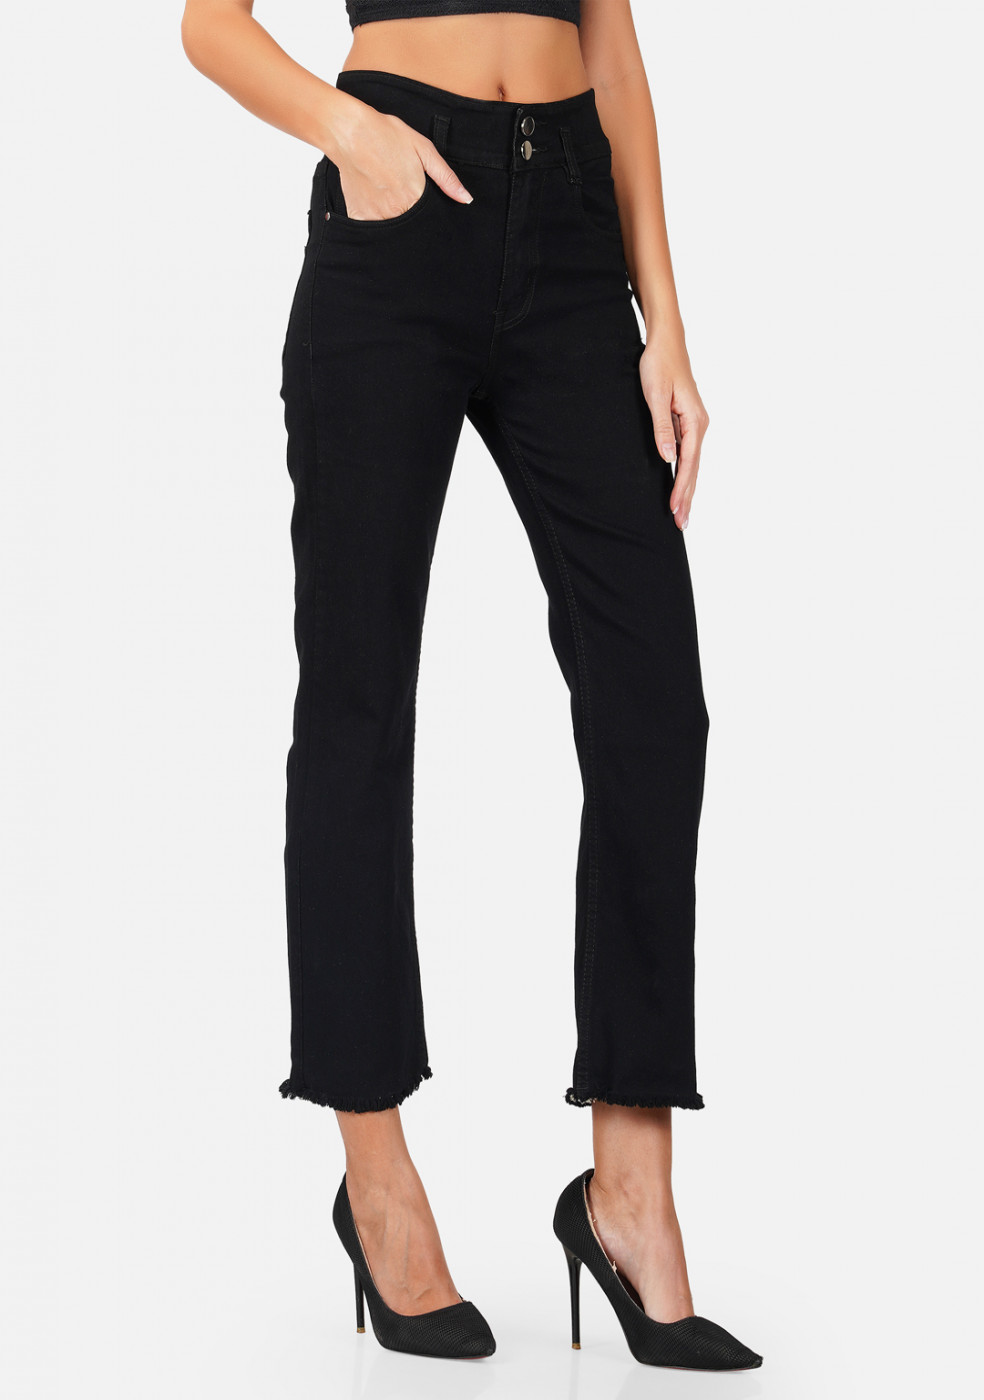 Stretchable Cotton Black Jeans For Women